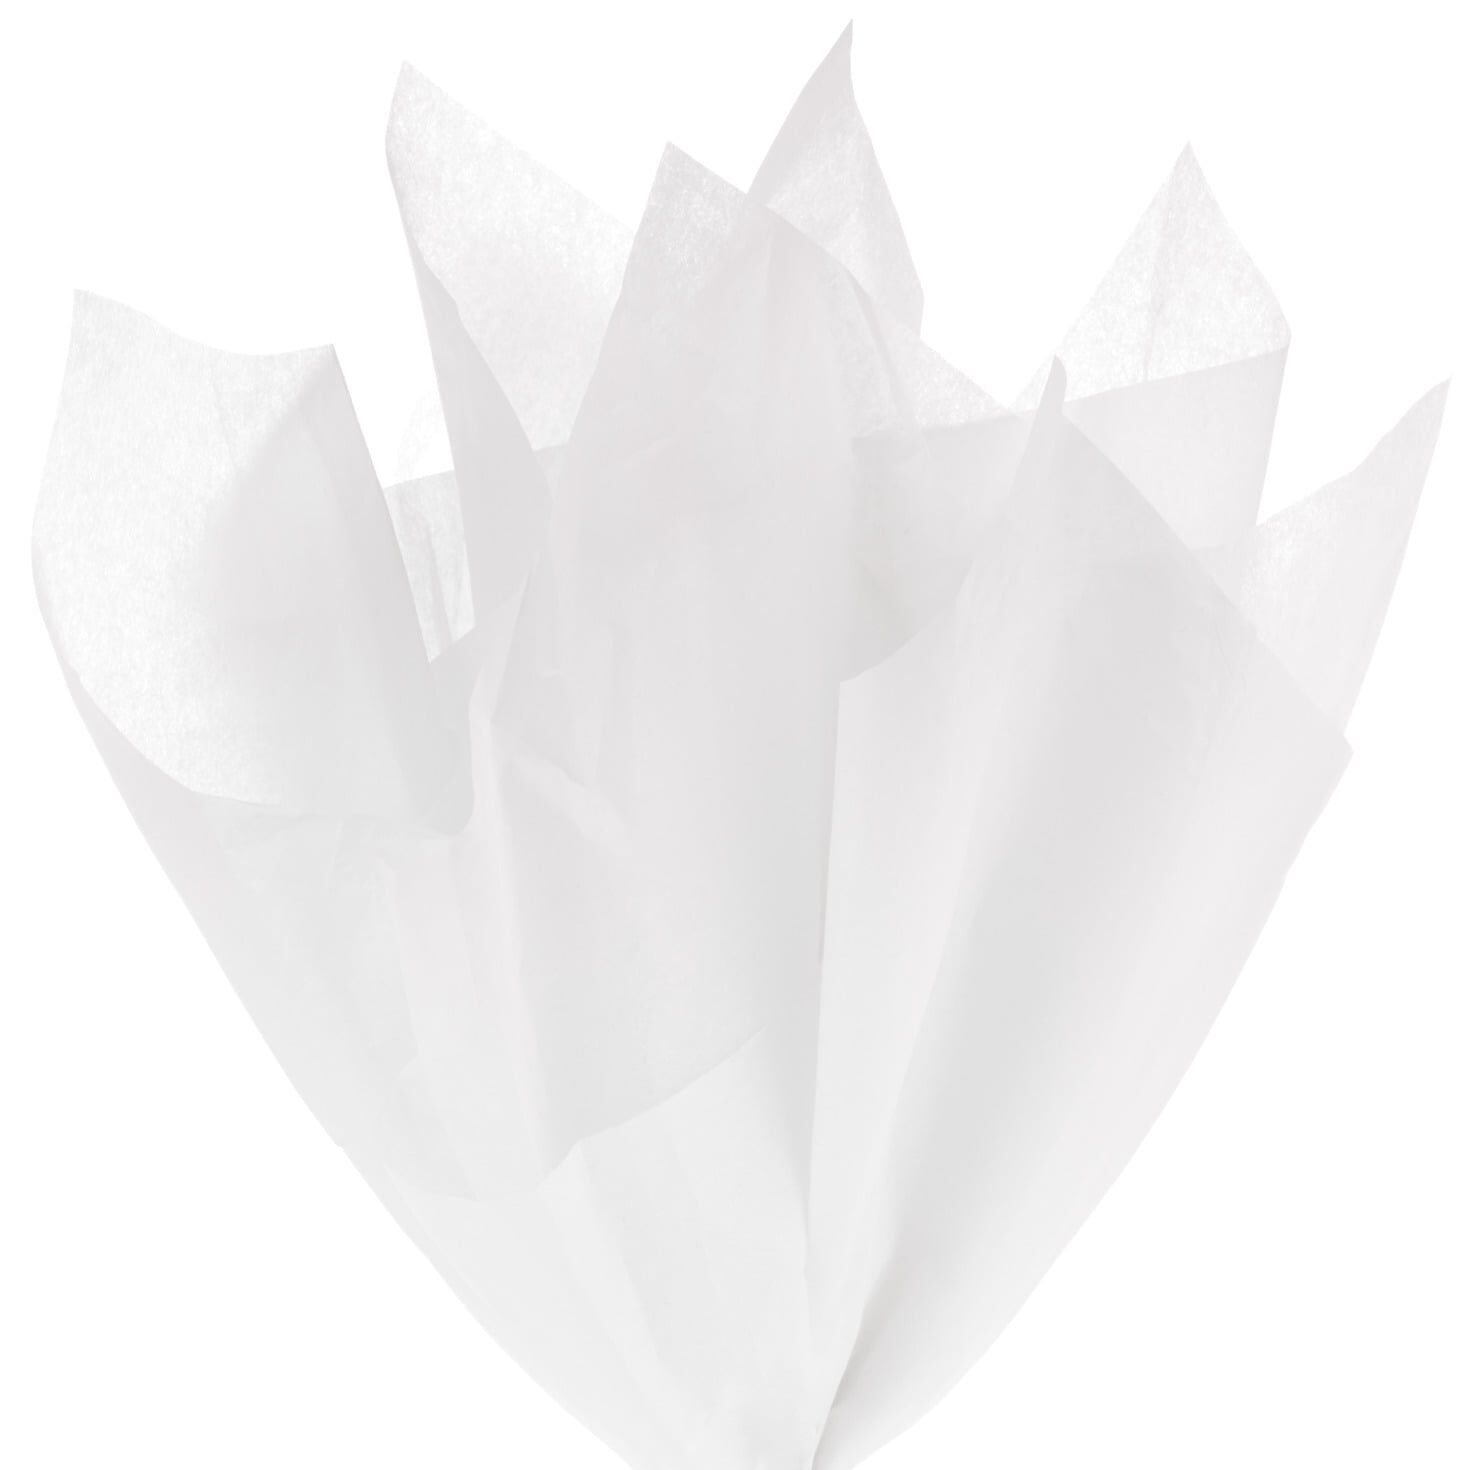 25 Sheets of White Tissue paper 15"x 20" Matte Finish ~ Gift Grade 